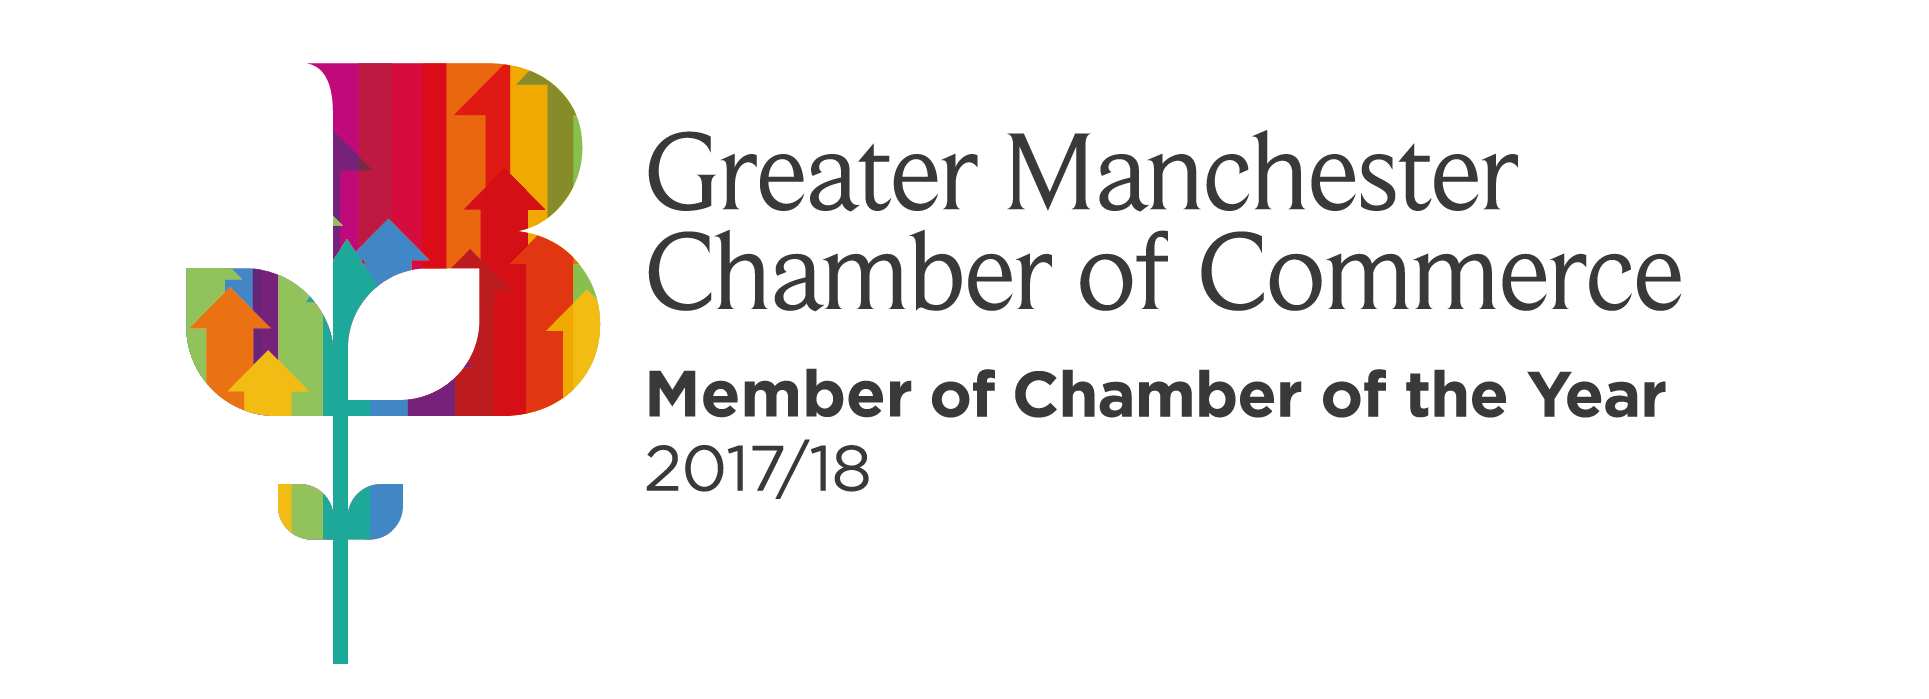 Masterflex - Greater Manchester Chamber of Commerce Member